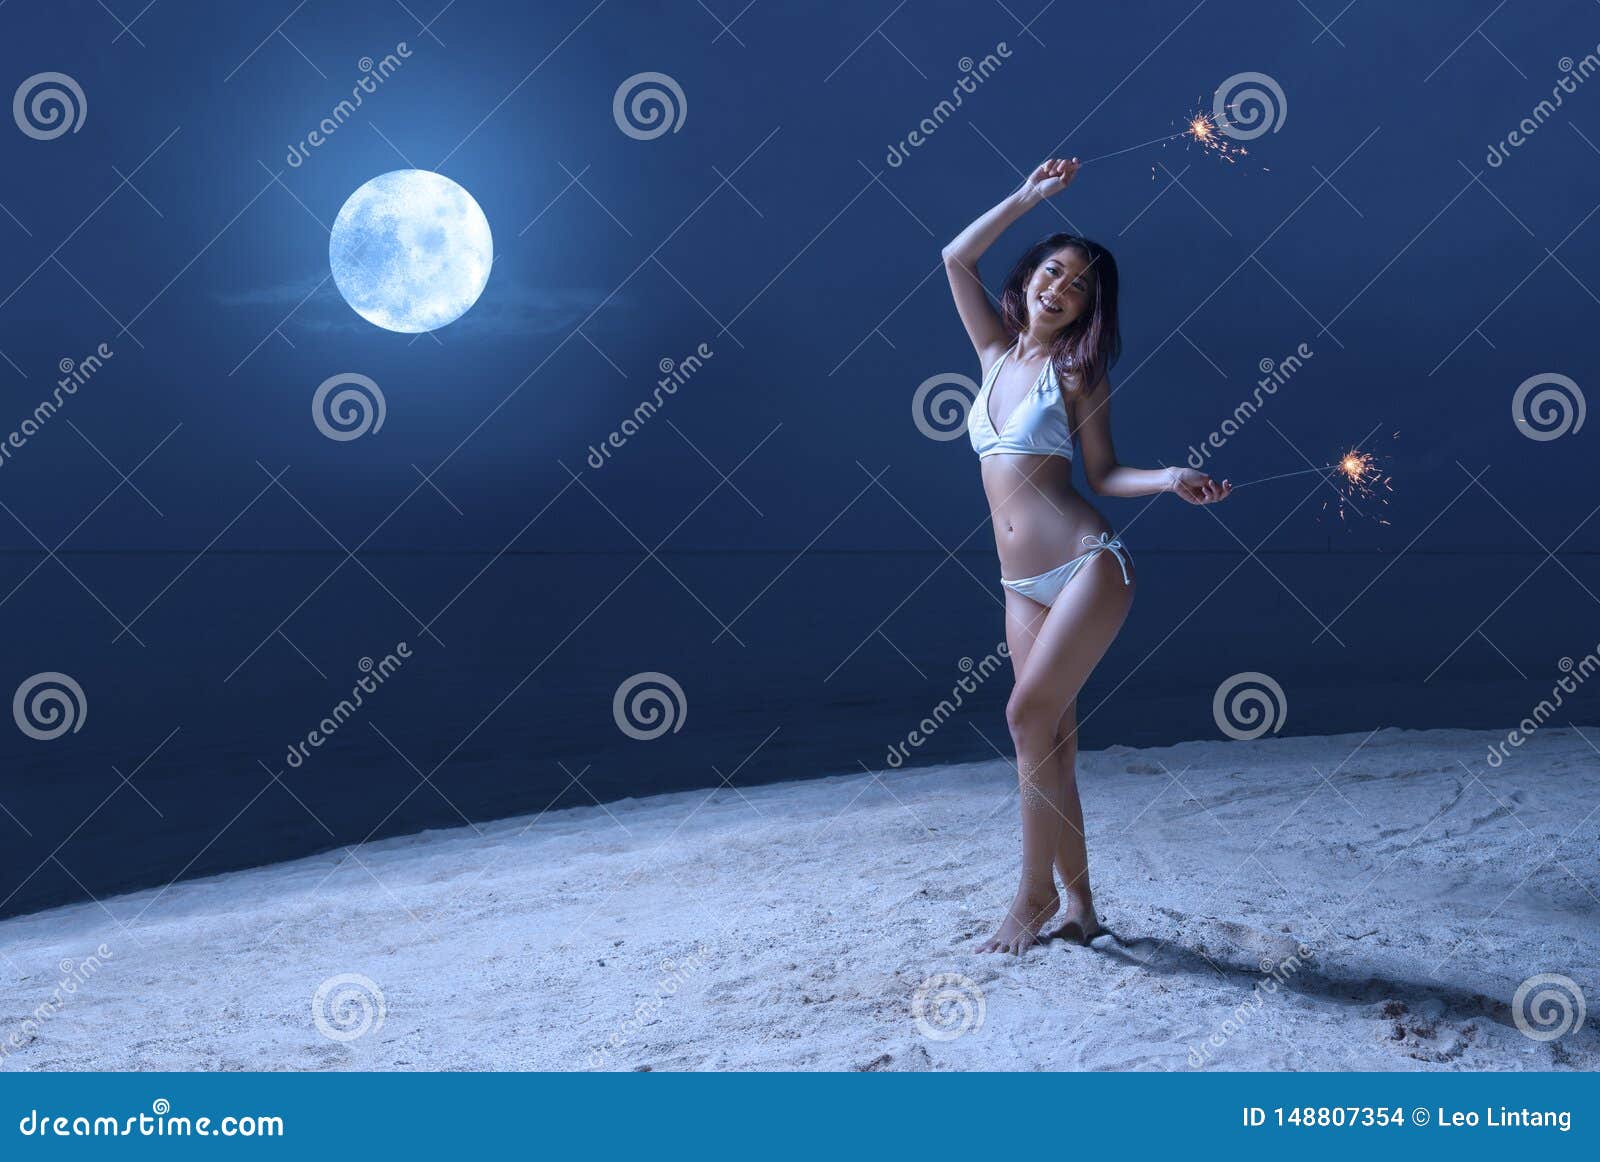 Sexy girl in night